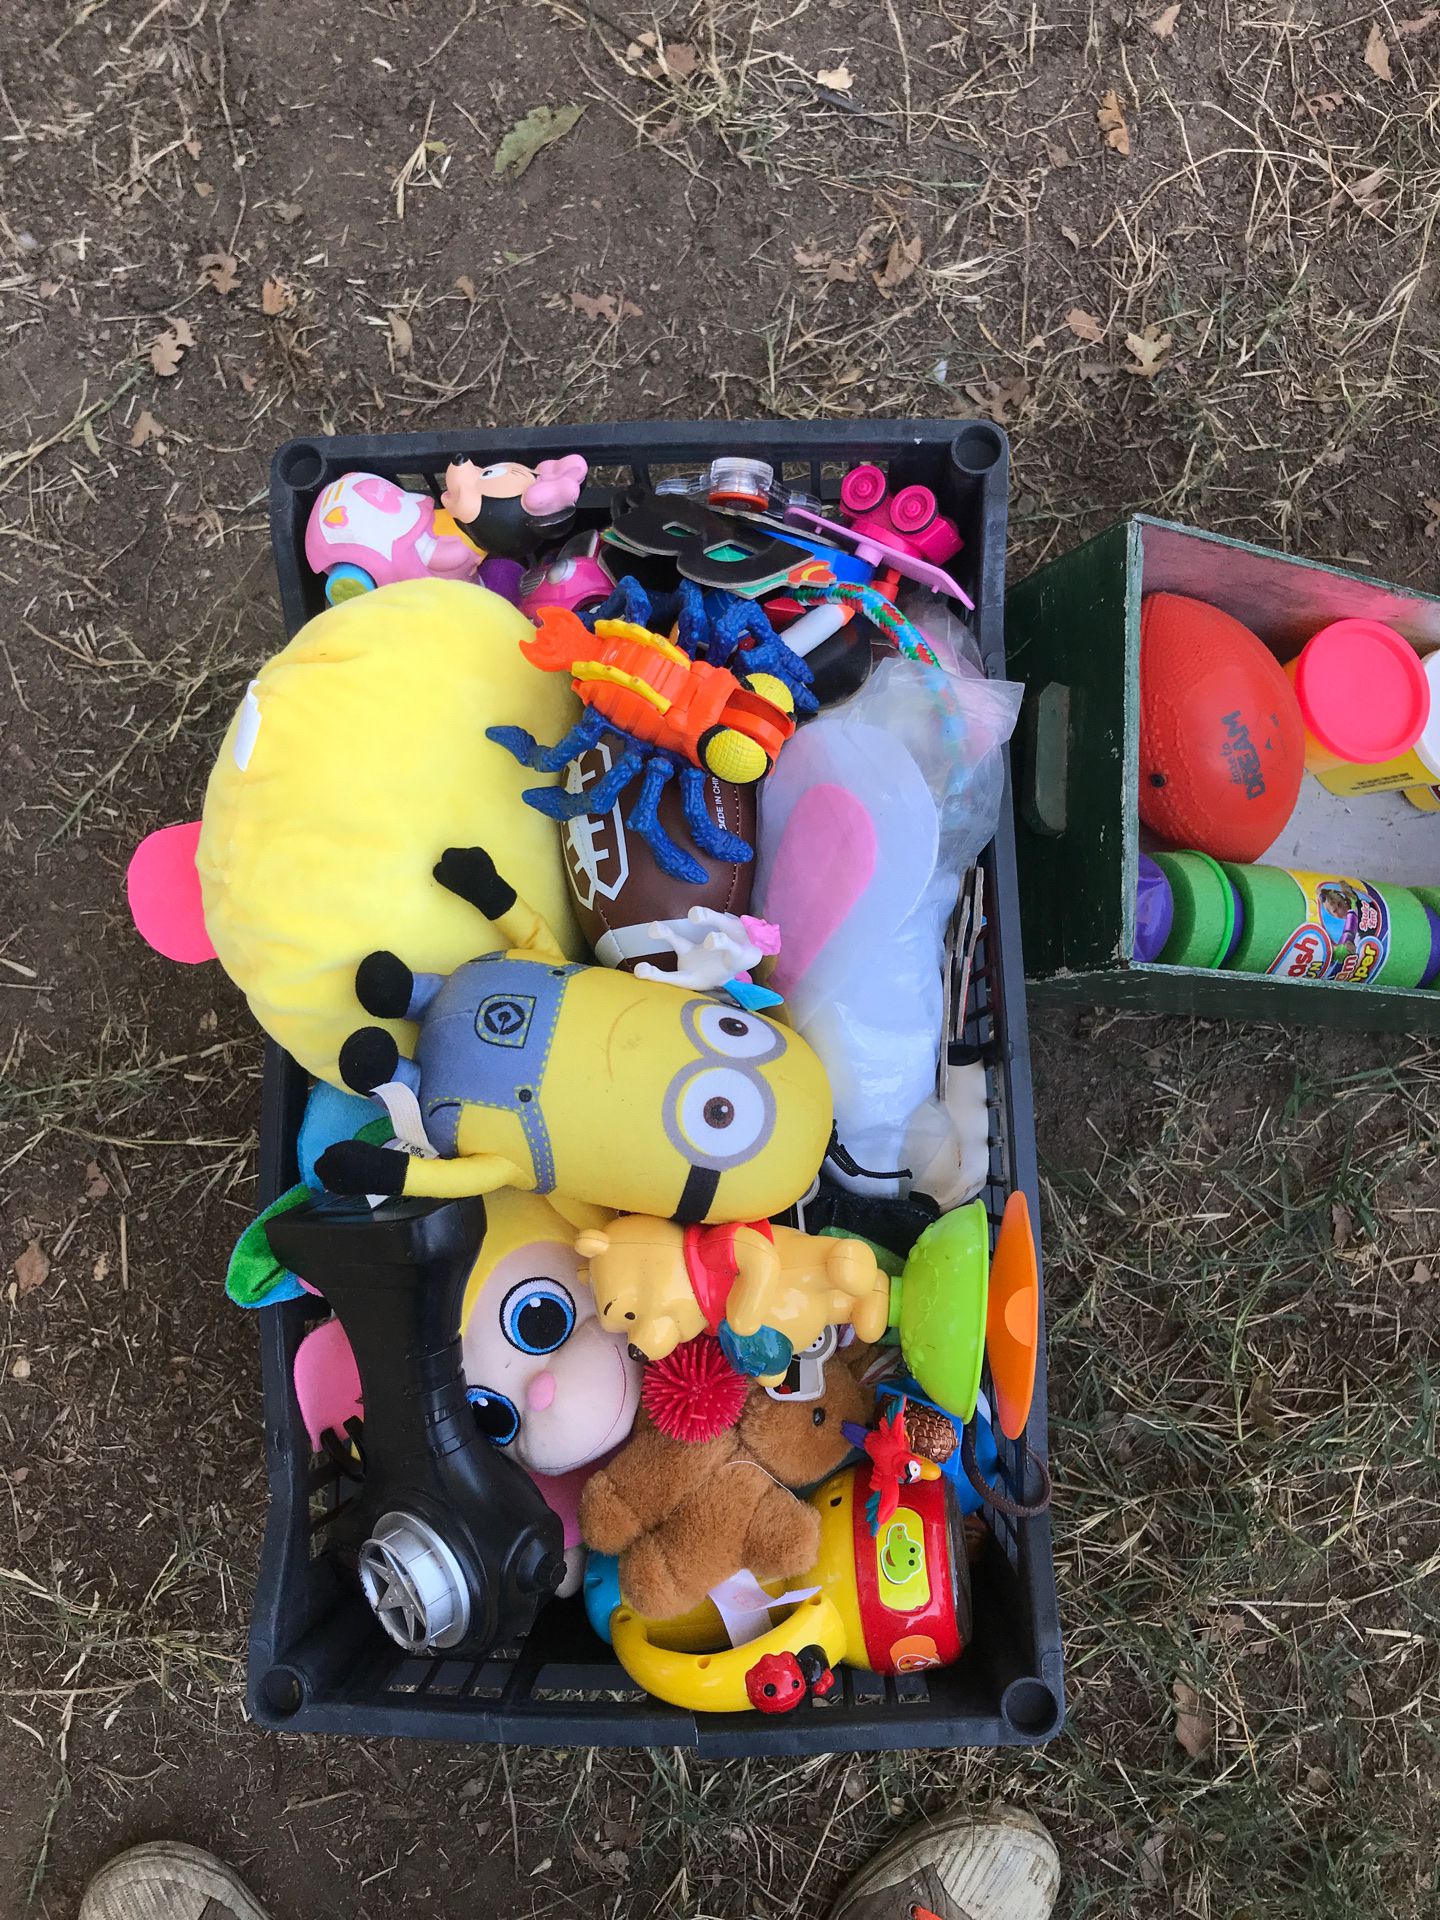 Box of kids various miscellaneous assorted random play toys stuffed animals etc